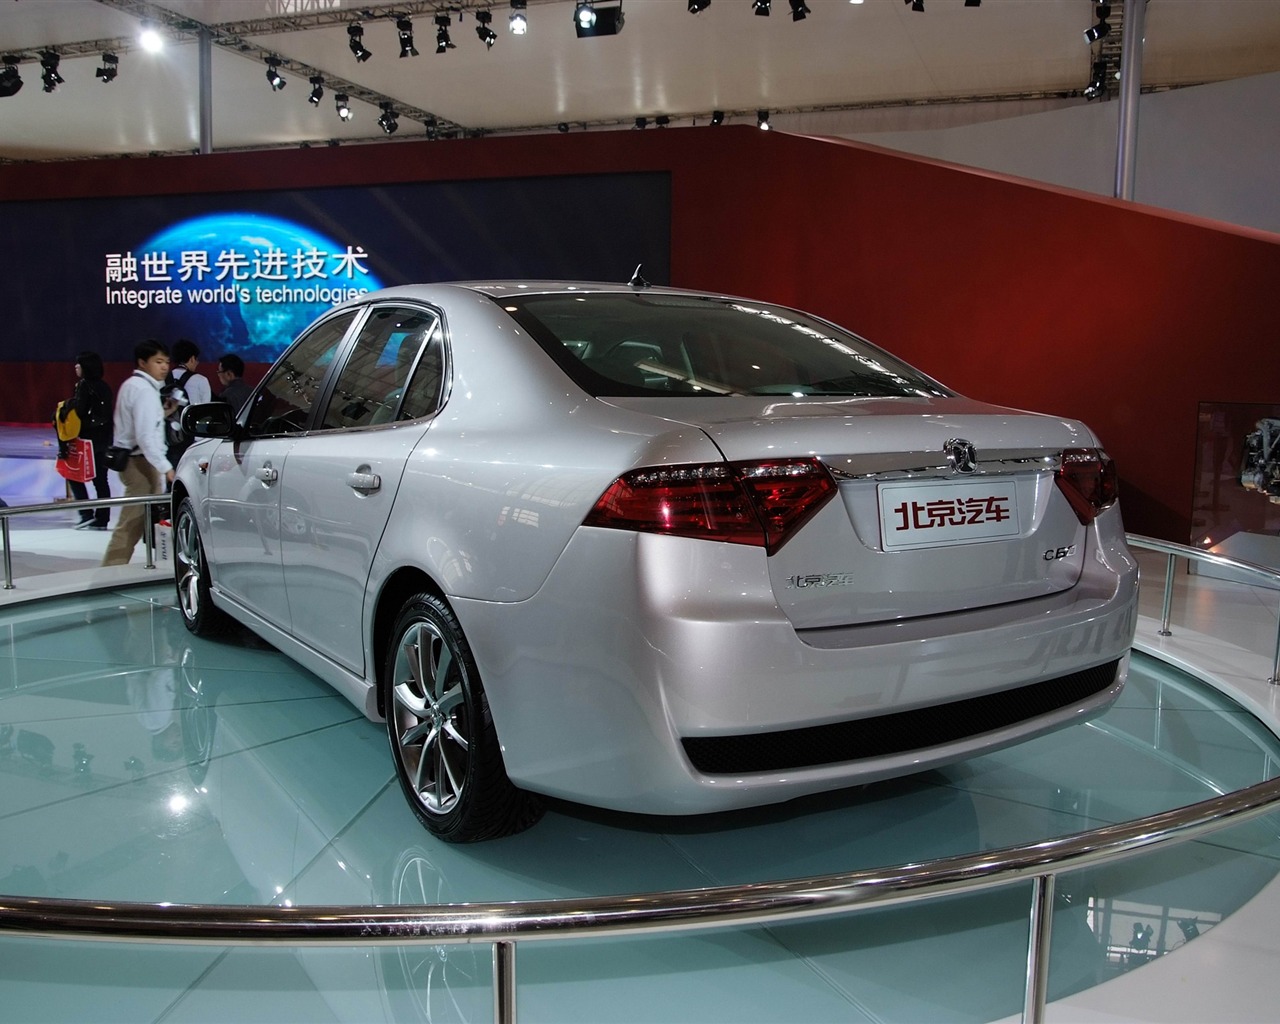 2010 Salón Internacional del Automóvil de Beijing Heung Che (obras barras de refuerzo) #10 - 1280x1024